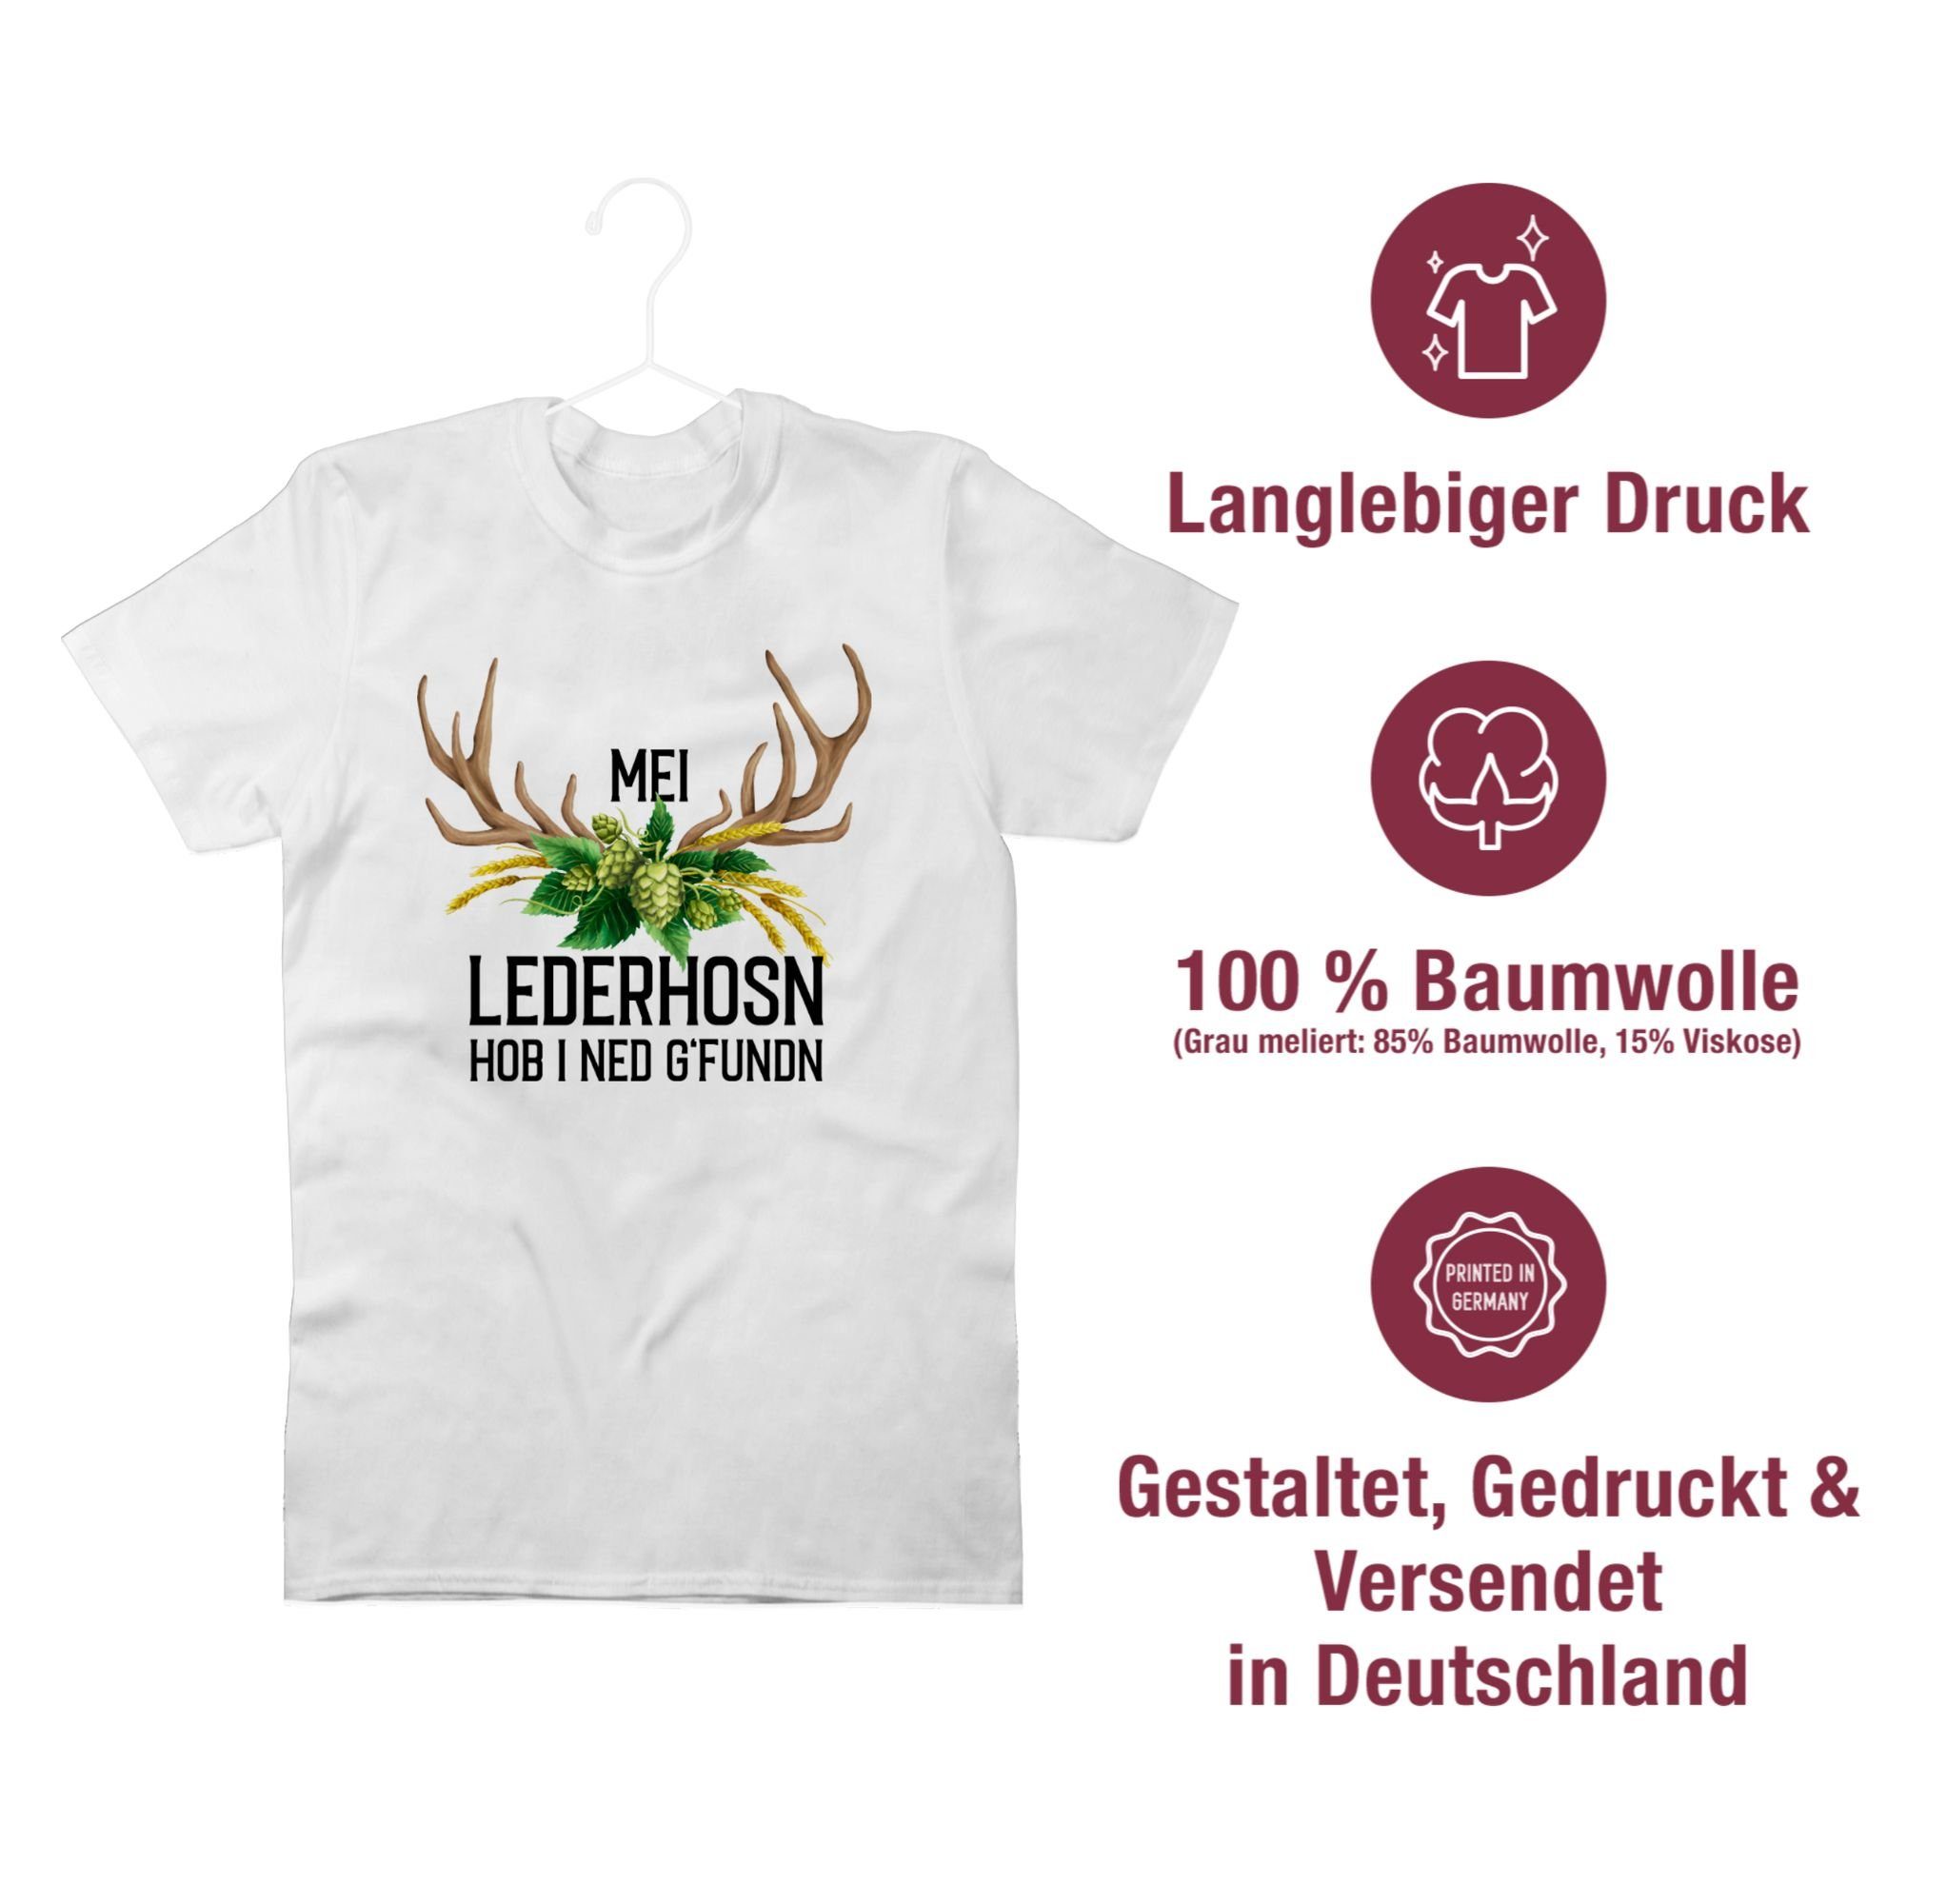 Oktoberfest Hopfen für Mode i 02 ned hob - g'fundn Weizen Lederhosn T-Shirt und Weiß Shirtracer Herren Mei Hirschgeweih